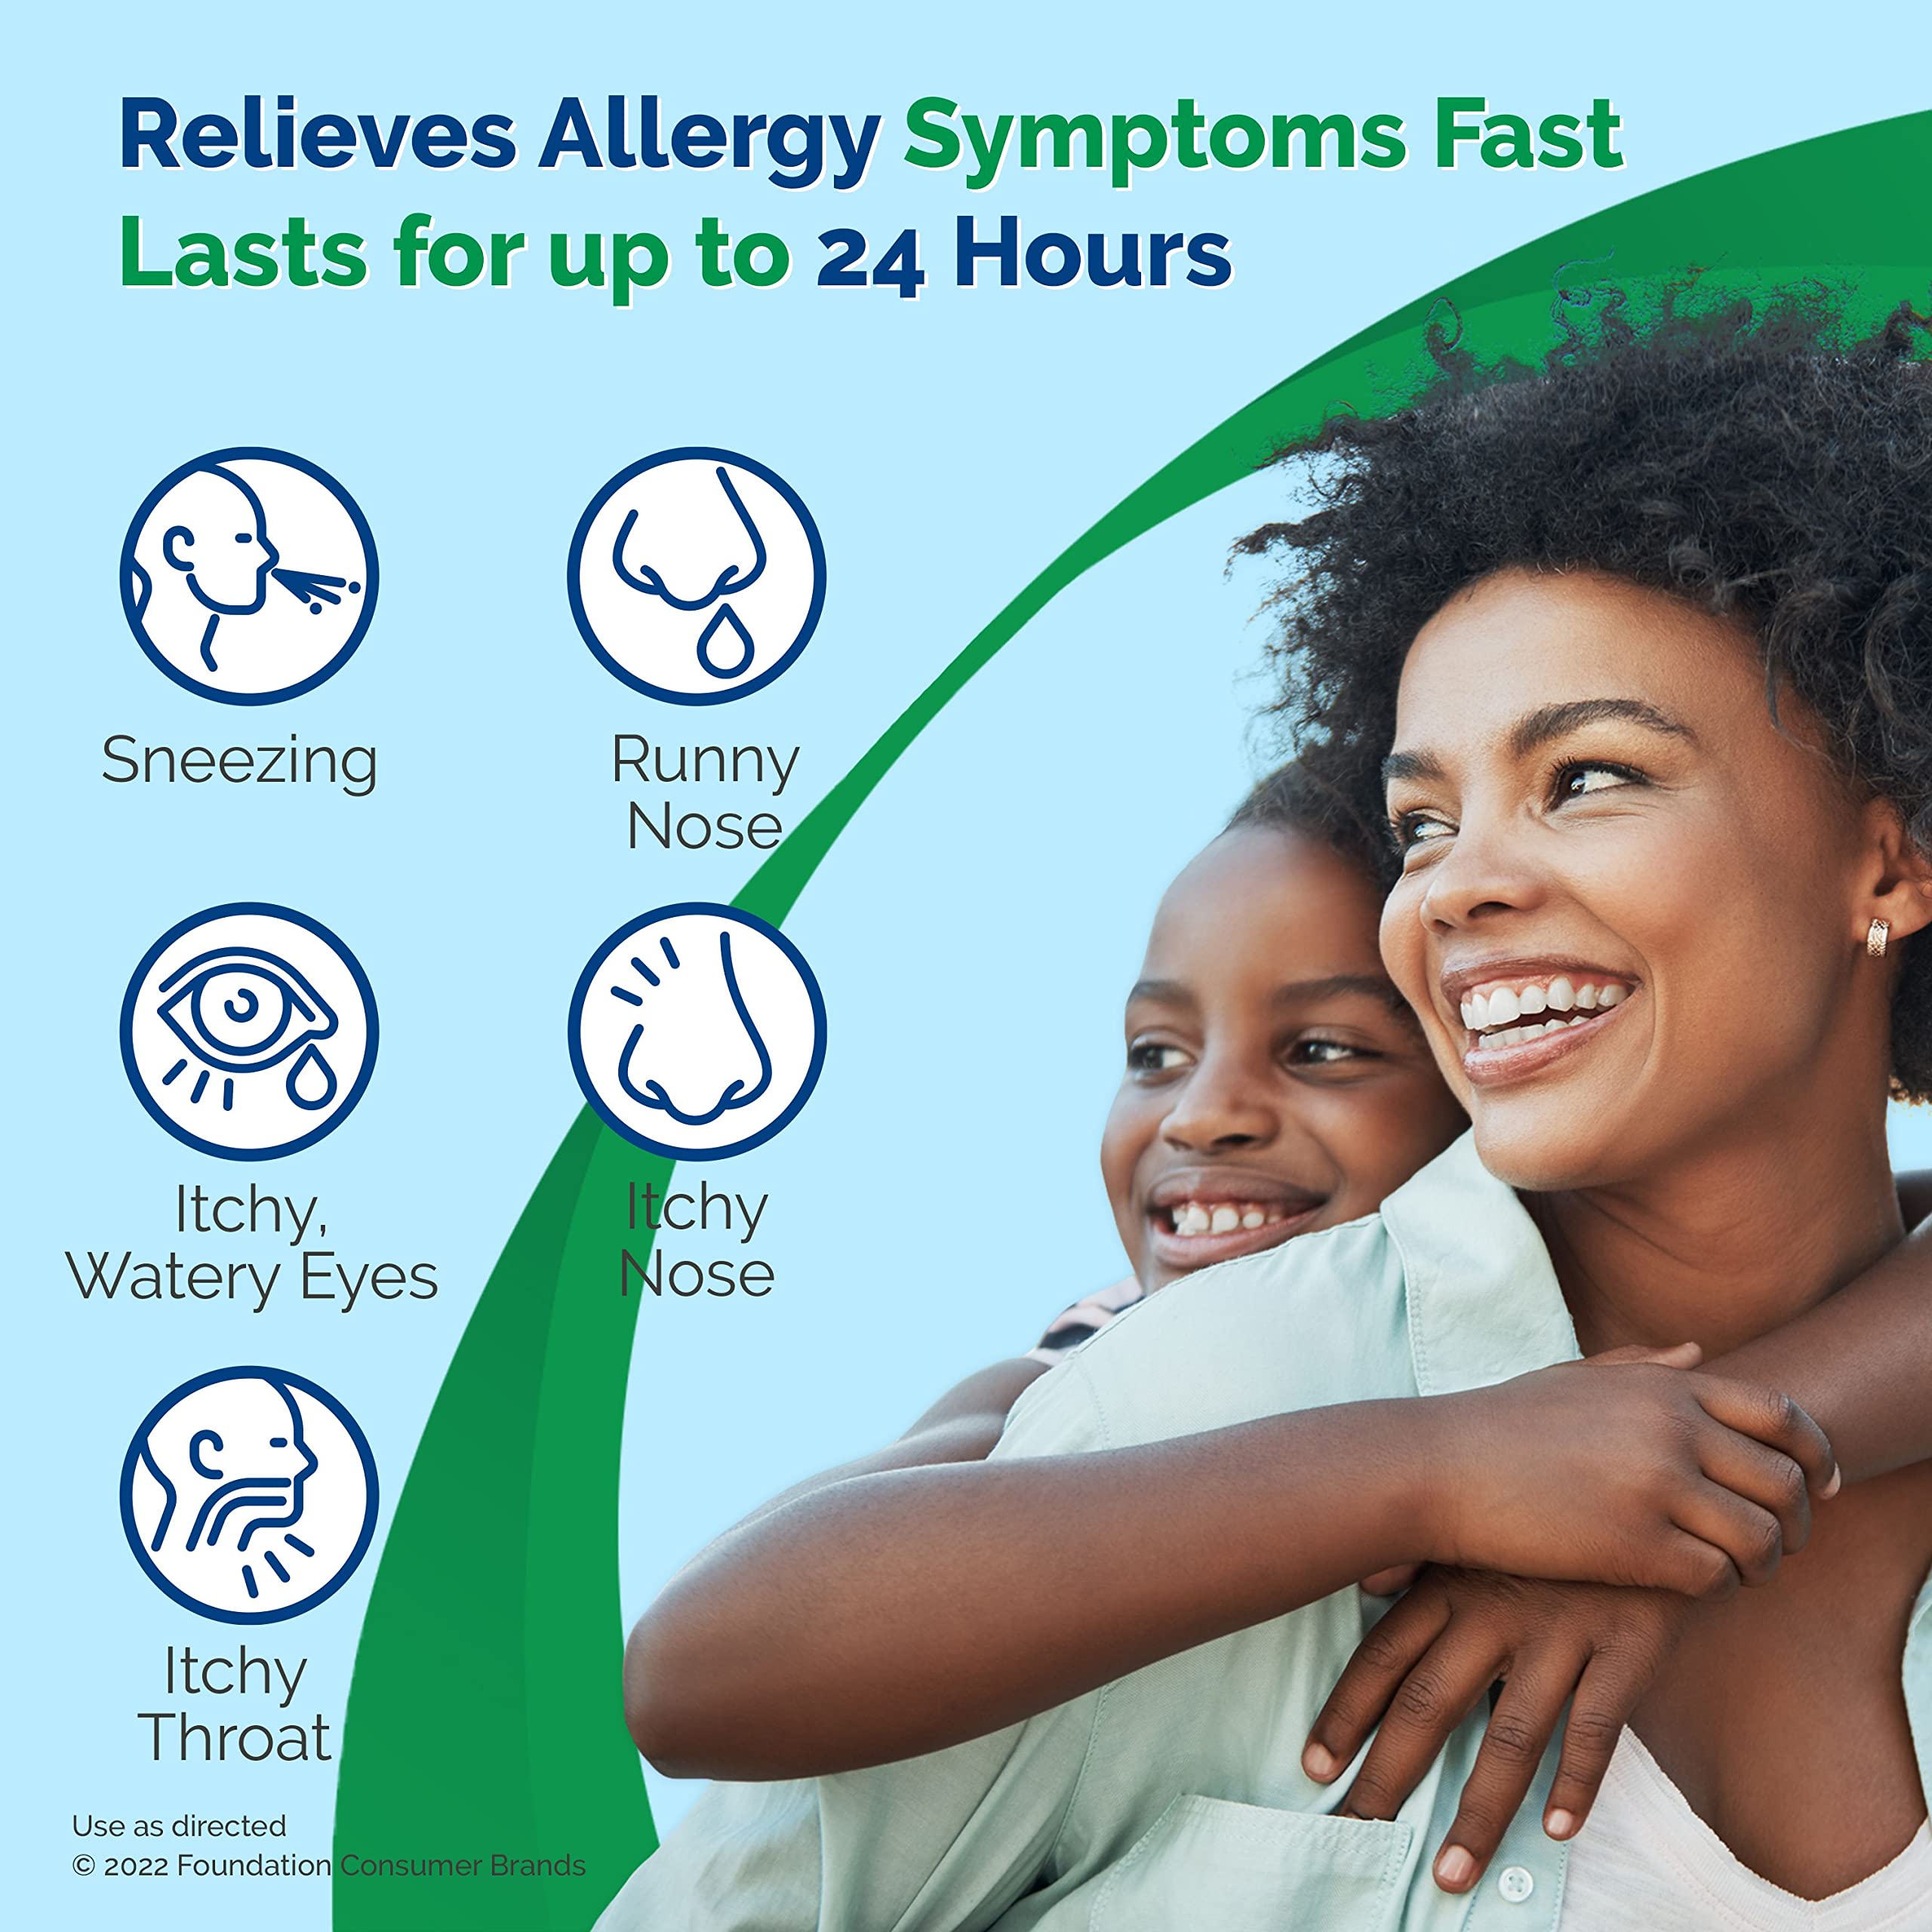 Alavert Allergy 24 Hour Relief, Citrus Burst Flavor, Orally Disintegrating Allergy Tablets, Non-drowsy Antihistamine, Loratadine 10mg, 60 Count